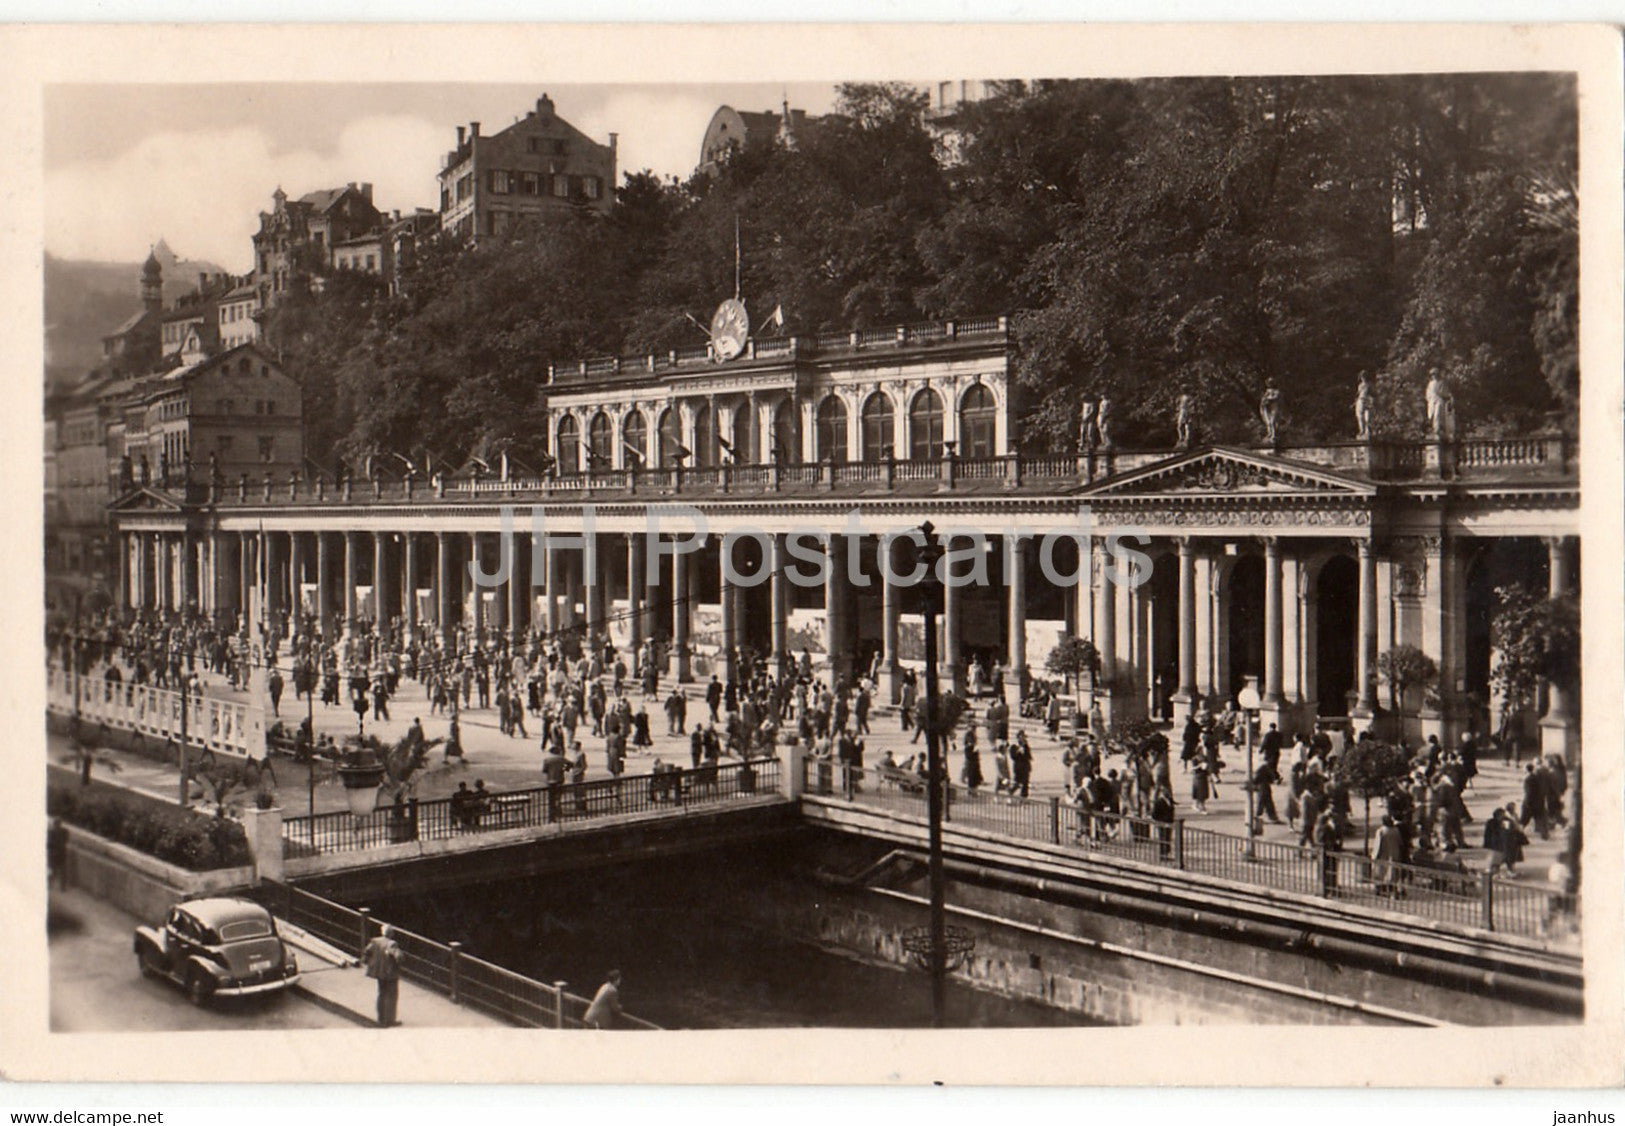 Karlovy Vary - Karlsbad - kolonada - Colonnade - old postcard - Czechoslovakia - Czech Republic - used - JH Postcards